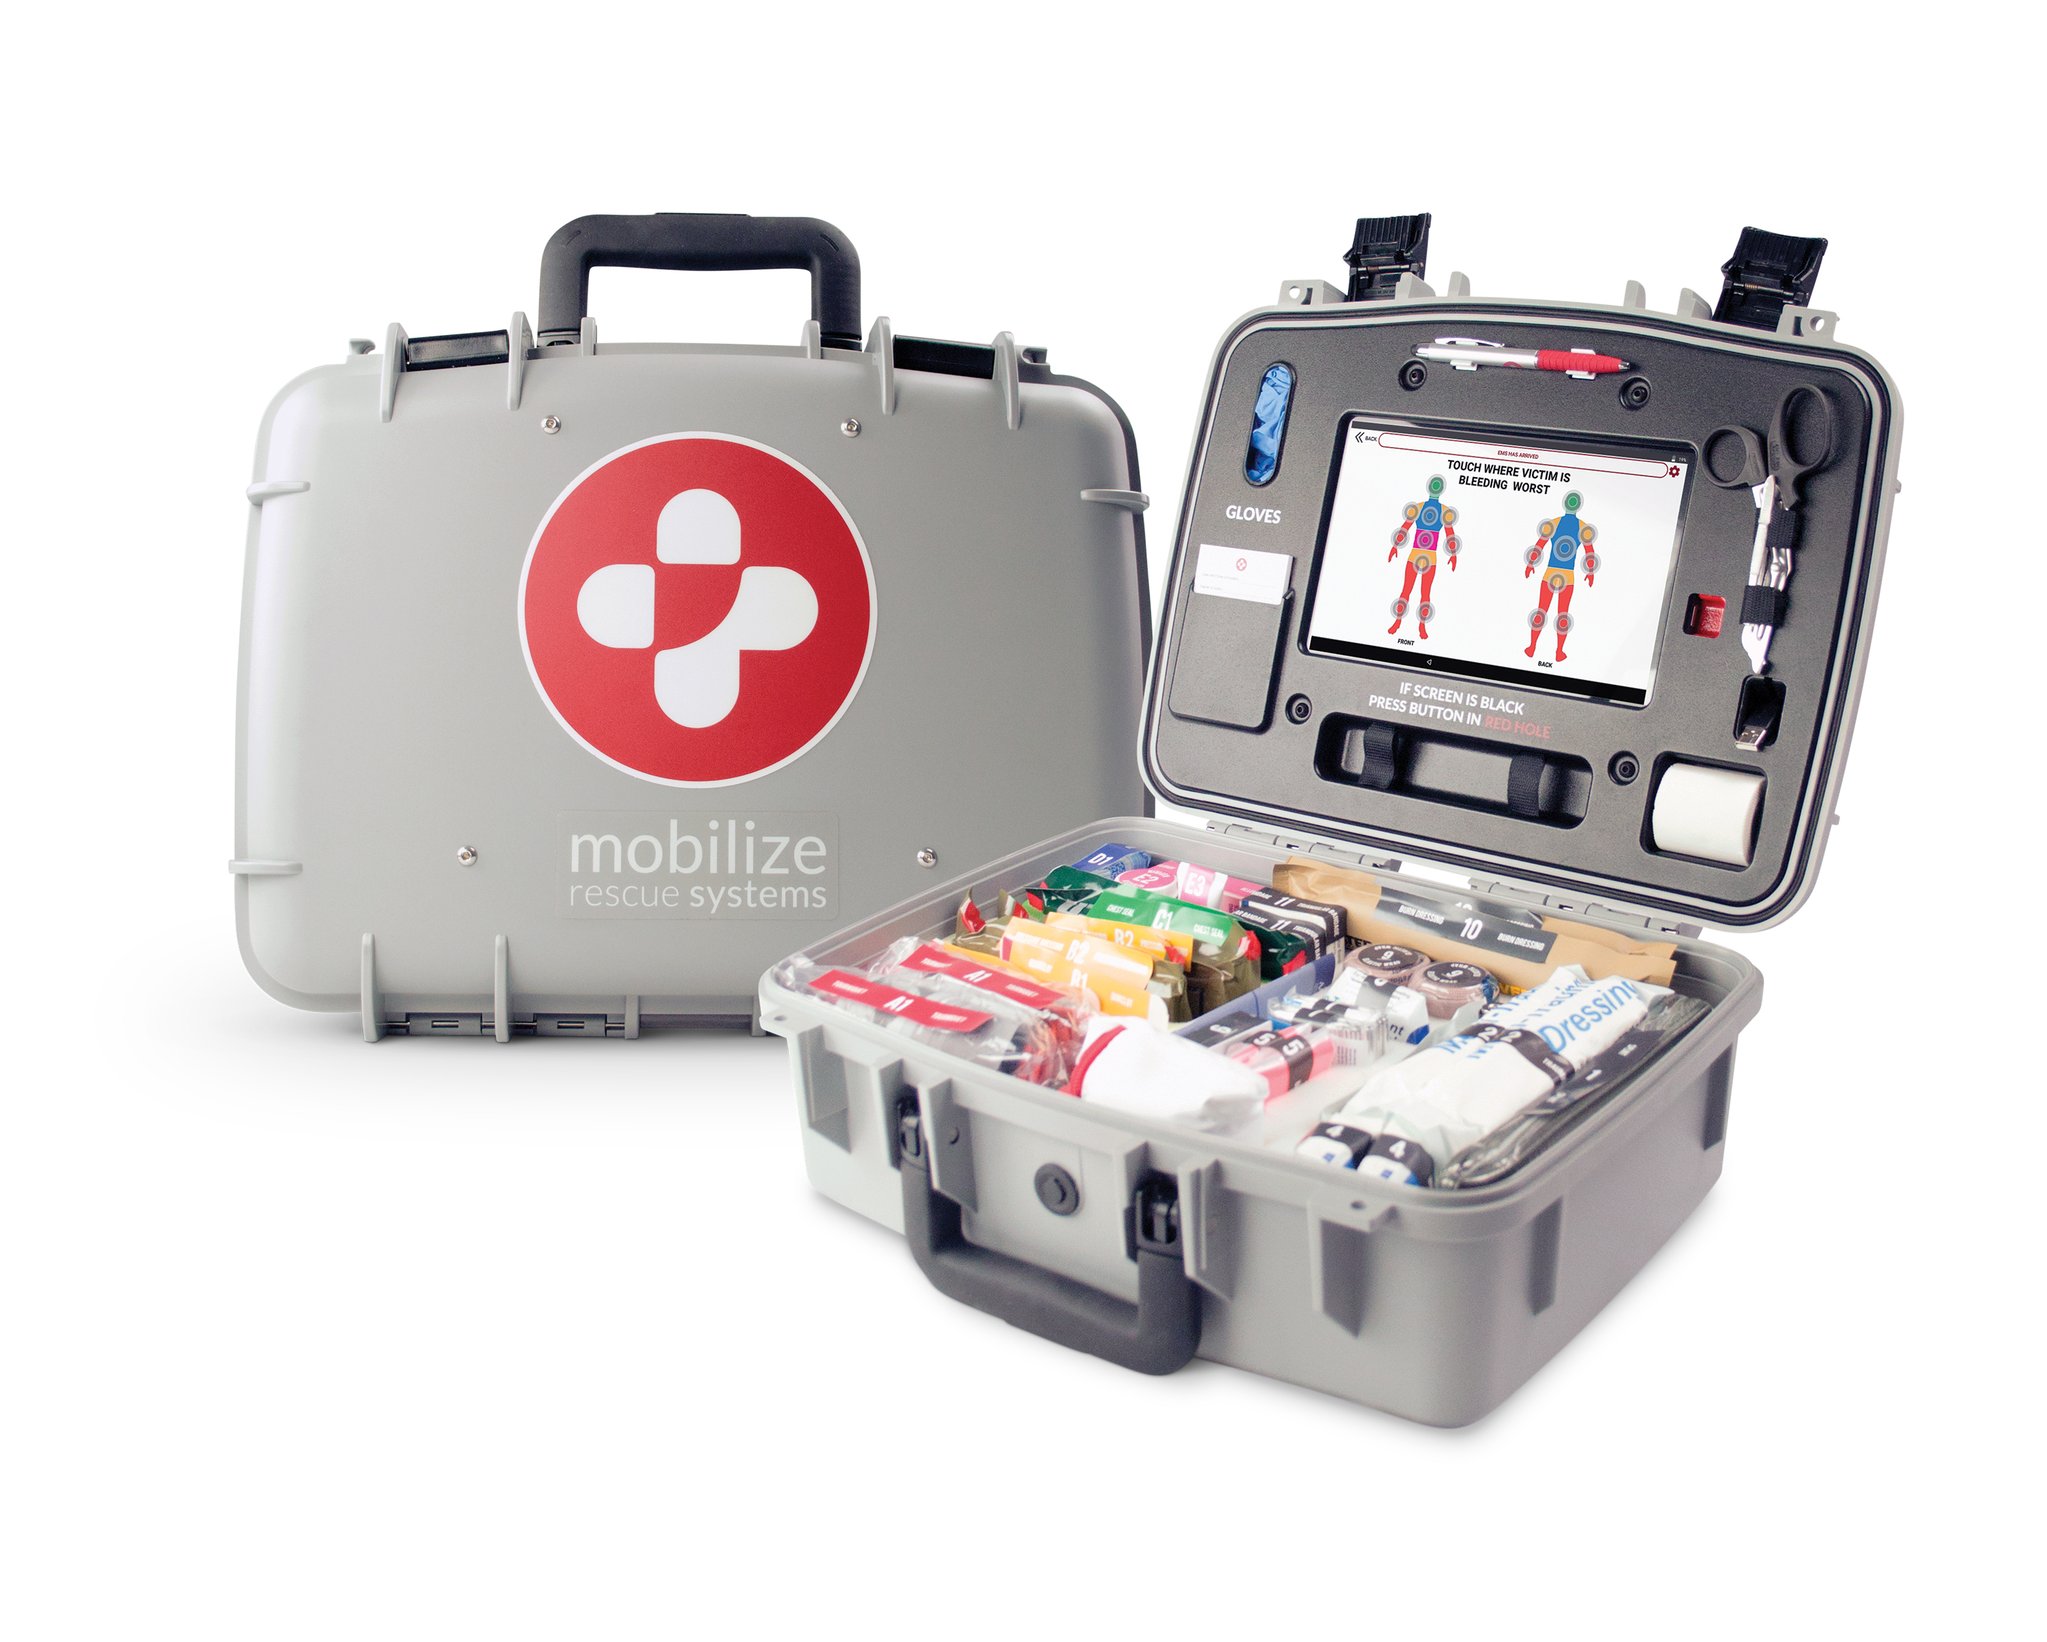 Trauma First Aid Medical Kit